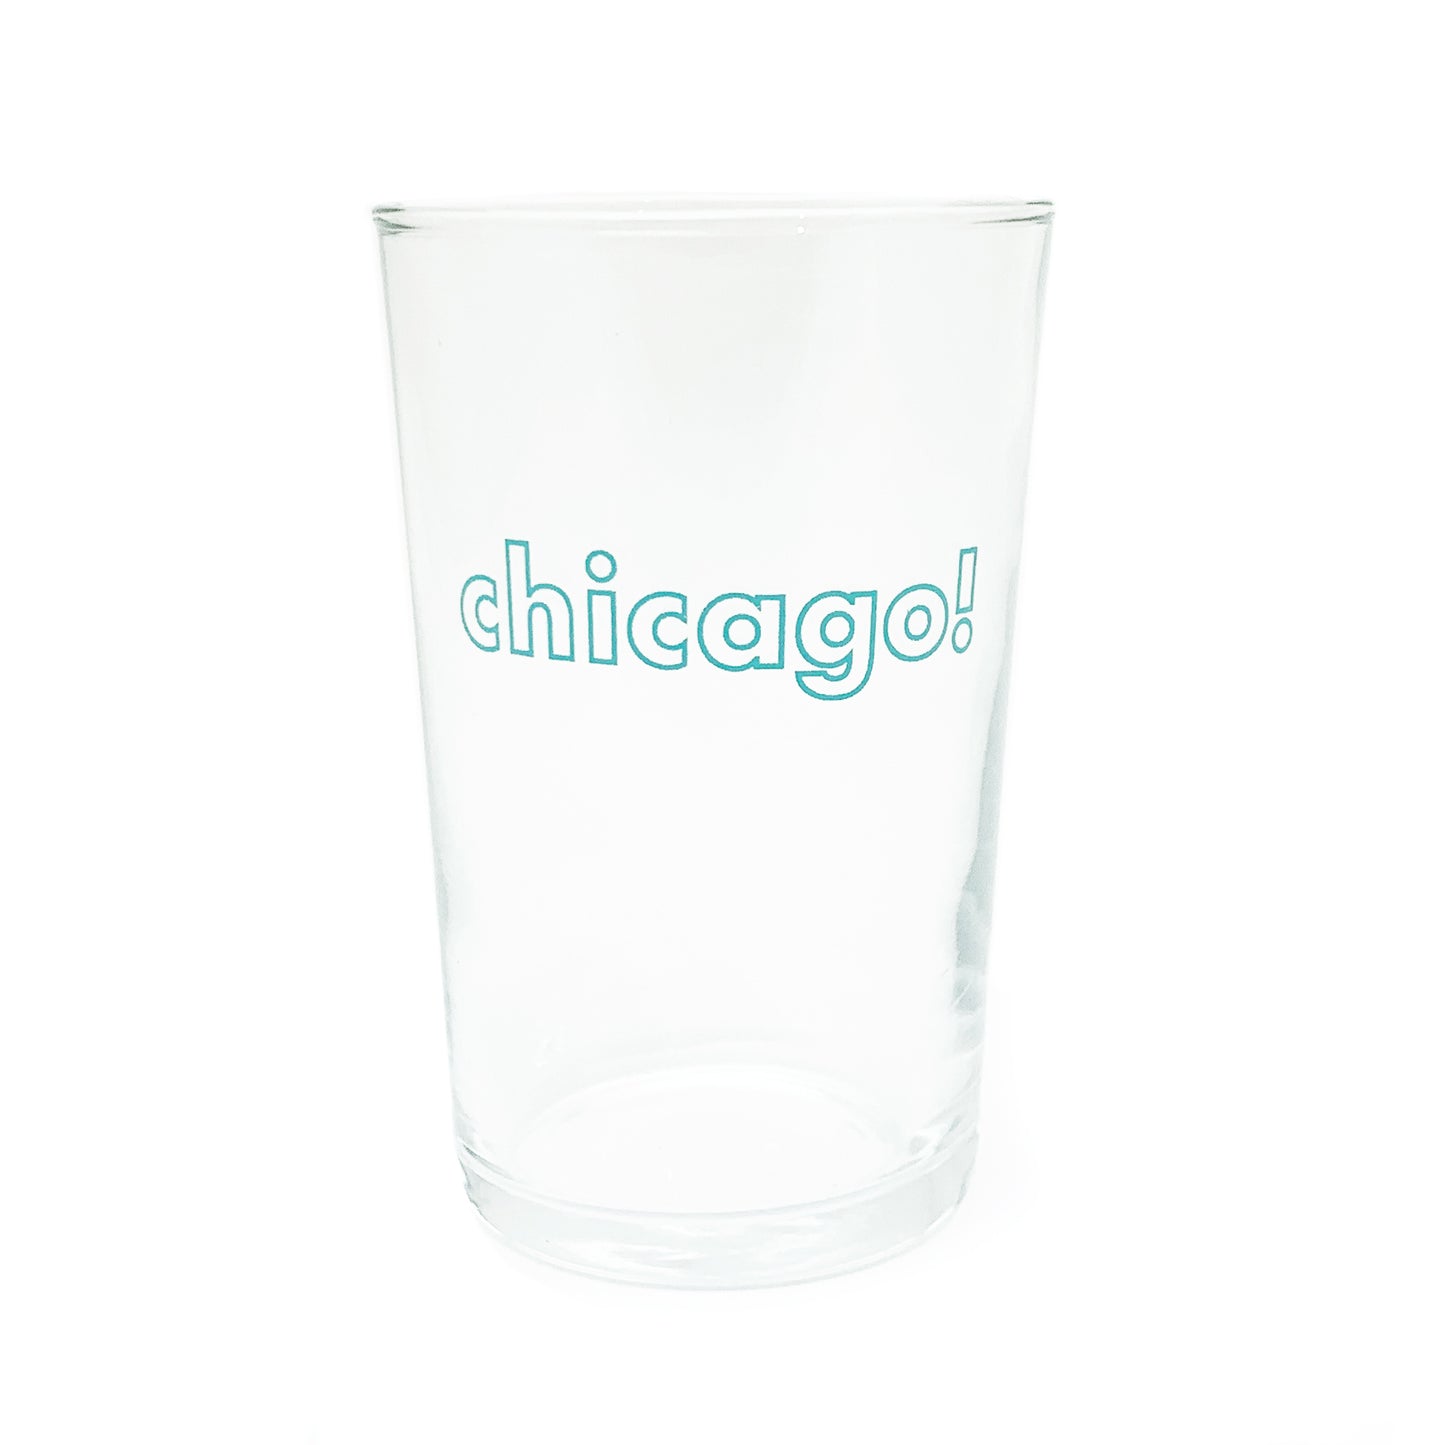 Chicago! 7 Oz Juice Glass